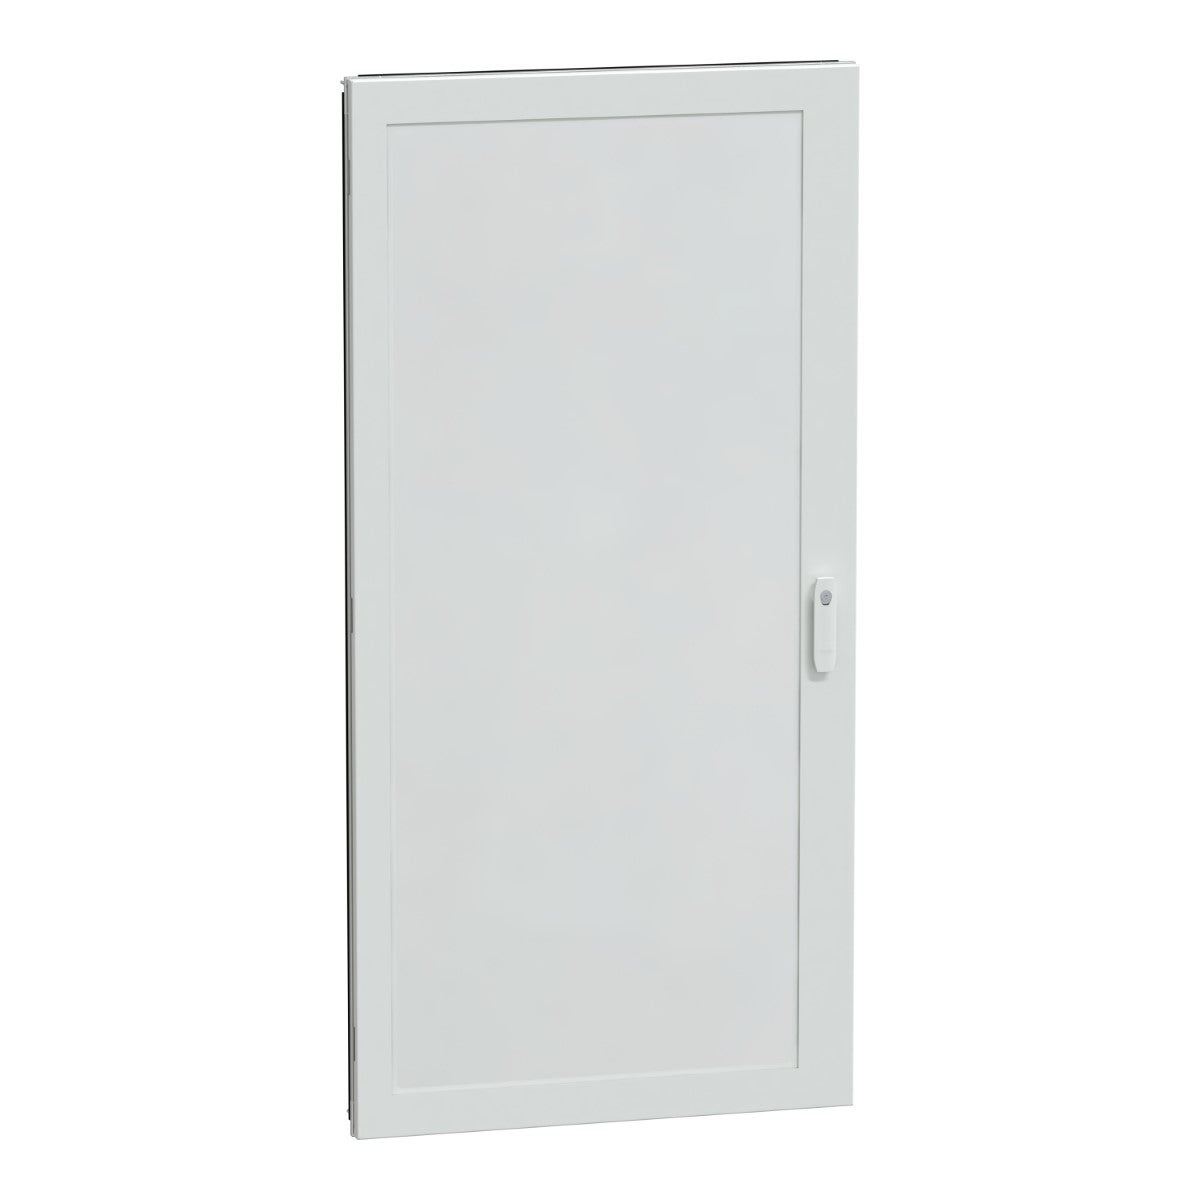 Door, PrismaSeT G, transparent with frame, 33M, W850, IP55, white, RAL 9003